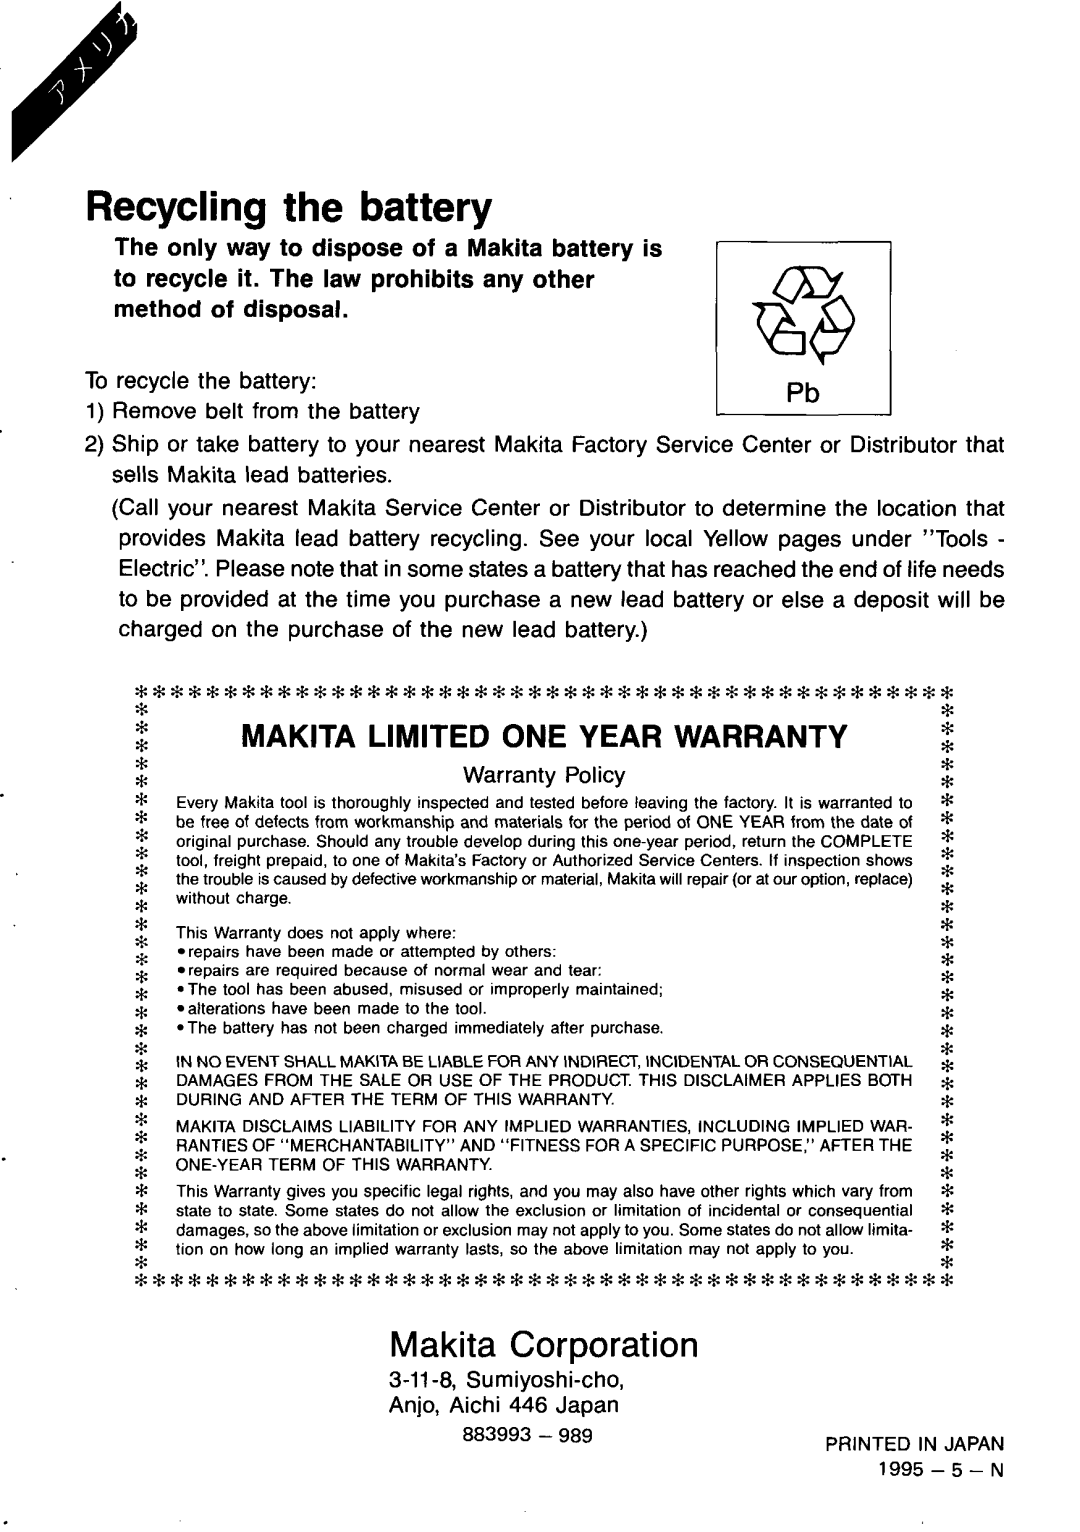 Makita UH303DST Makita Limited One Year Warranty, Recycling the battery, Makita Corporation, 1995 - 5 - N, 883993 